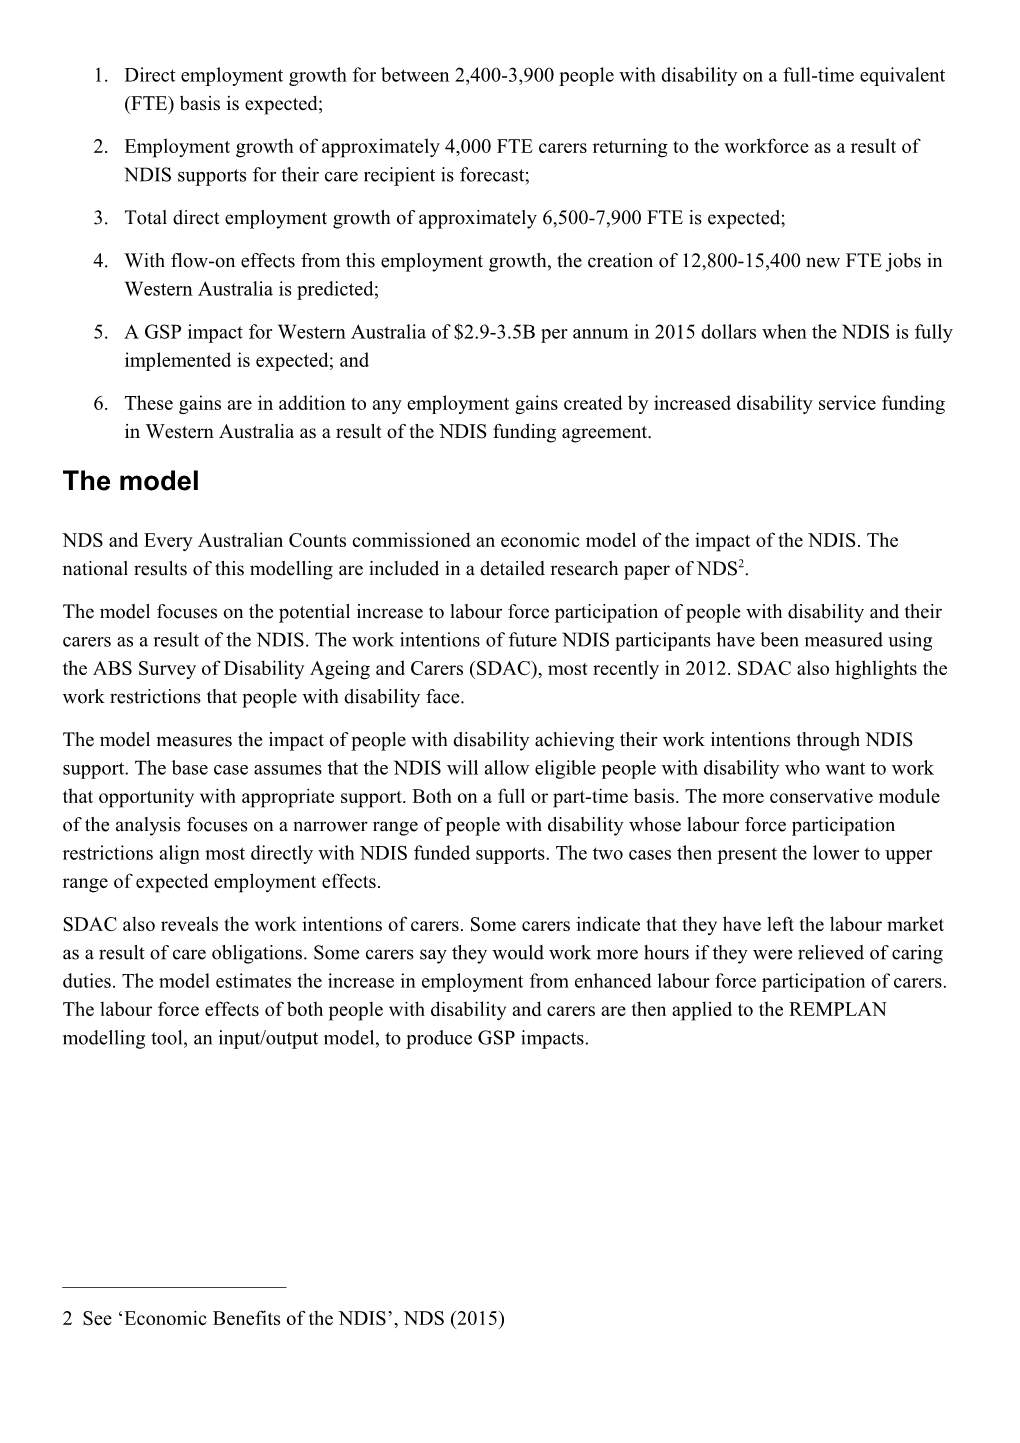 Economic Benefits of the NDIS in Western Australia